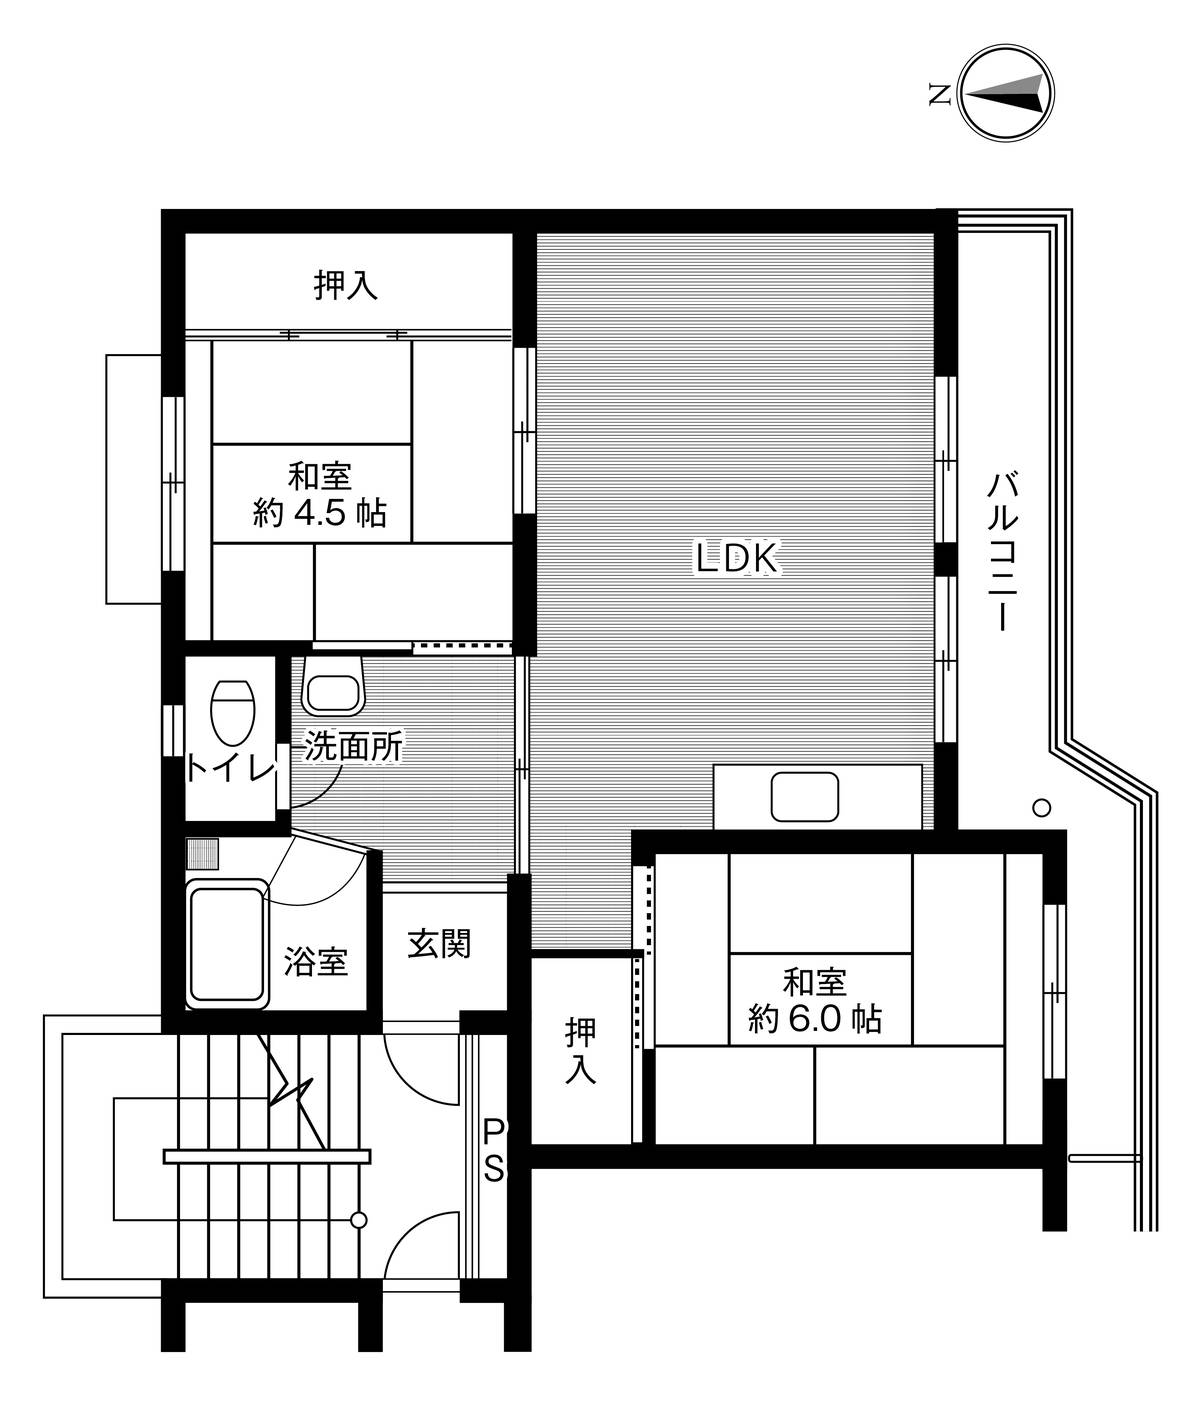 2LDK floorplan of Village House Toyooka in Suzaka-shi